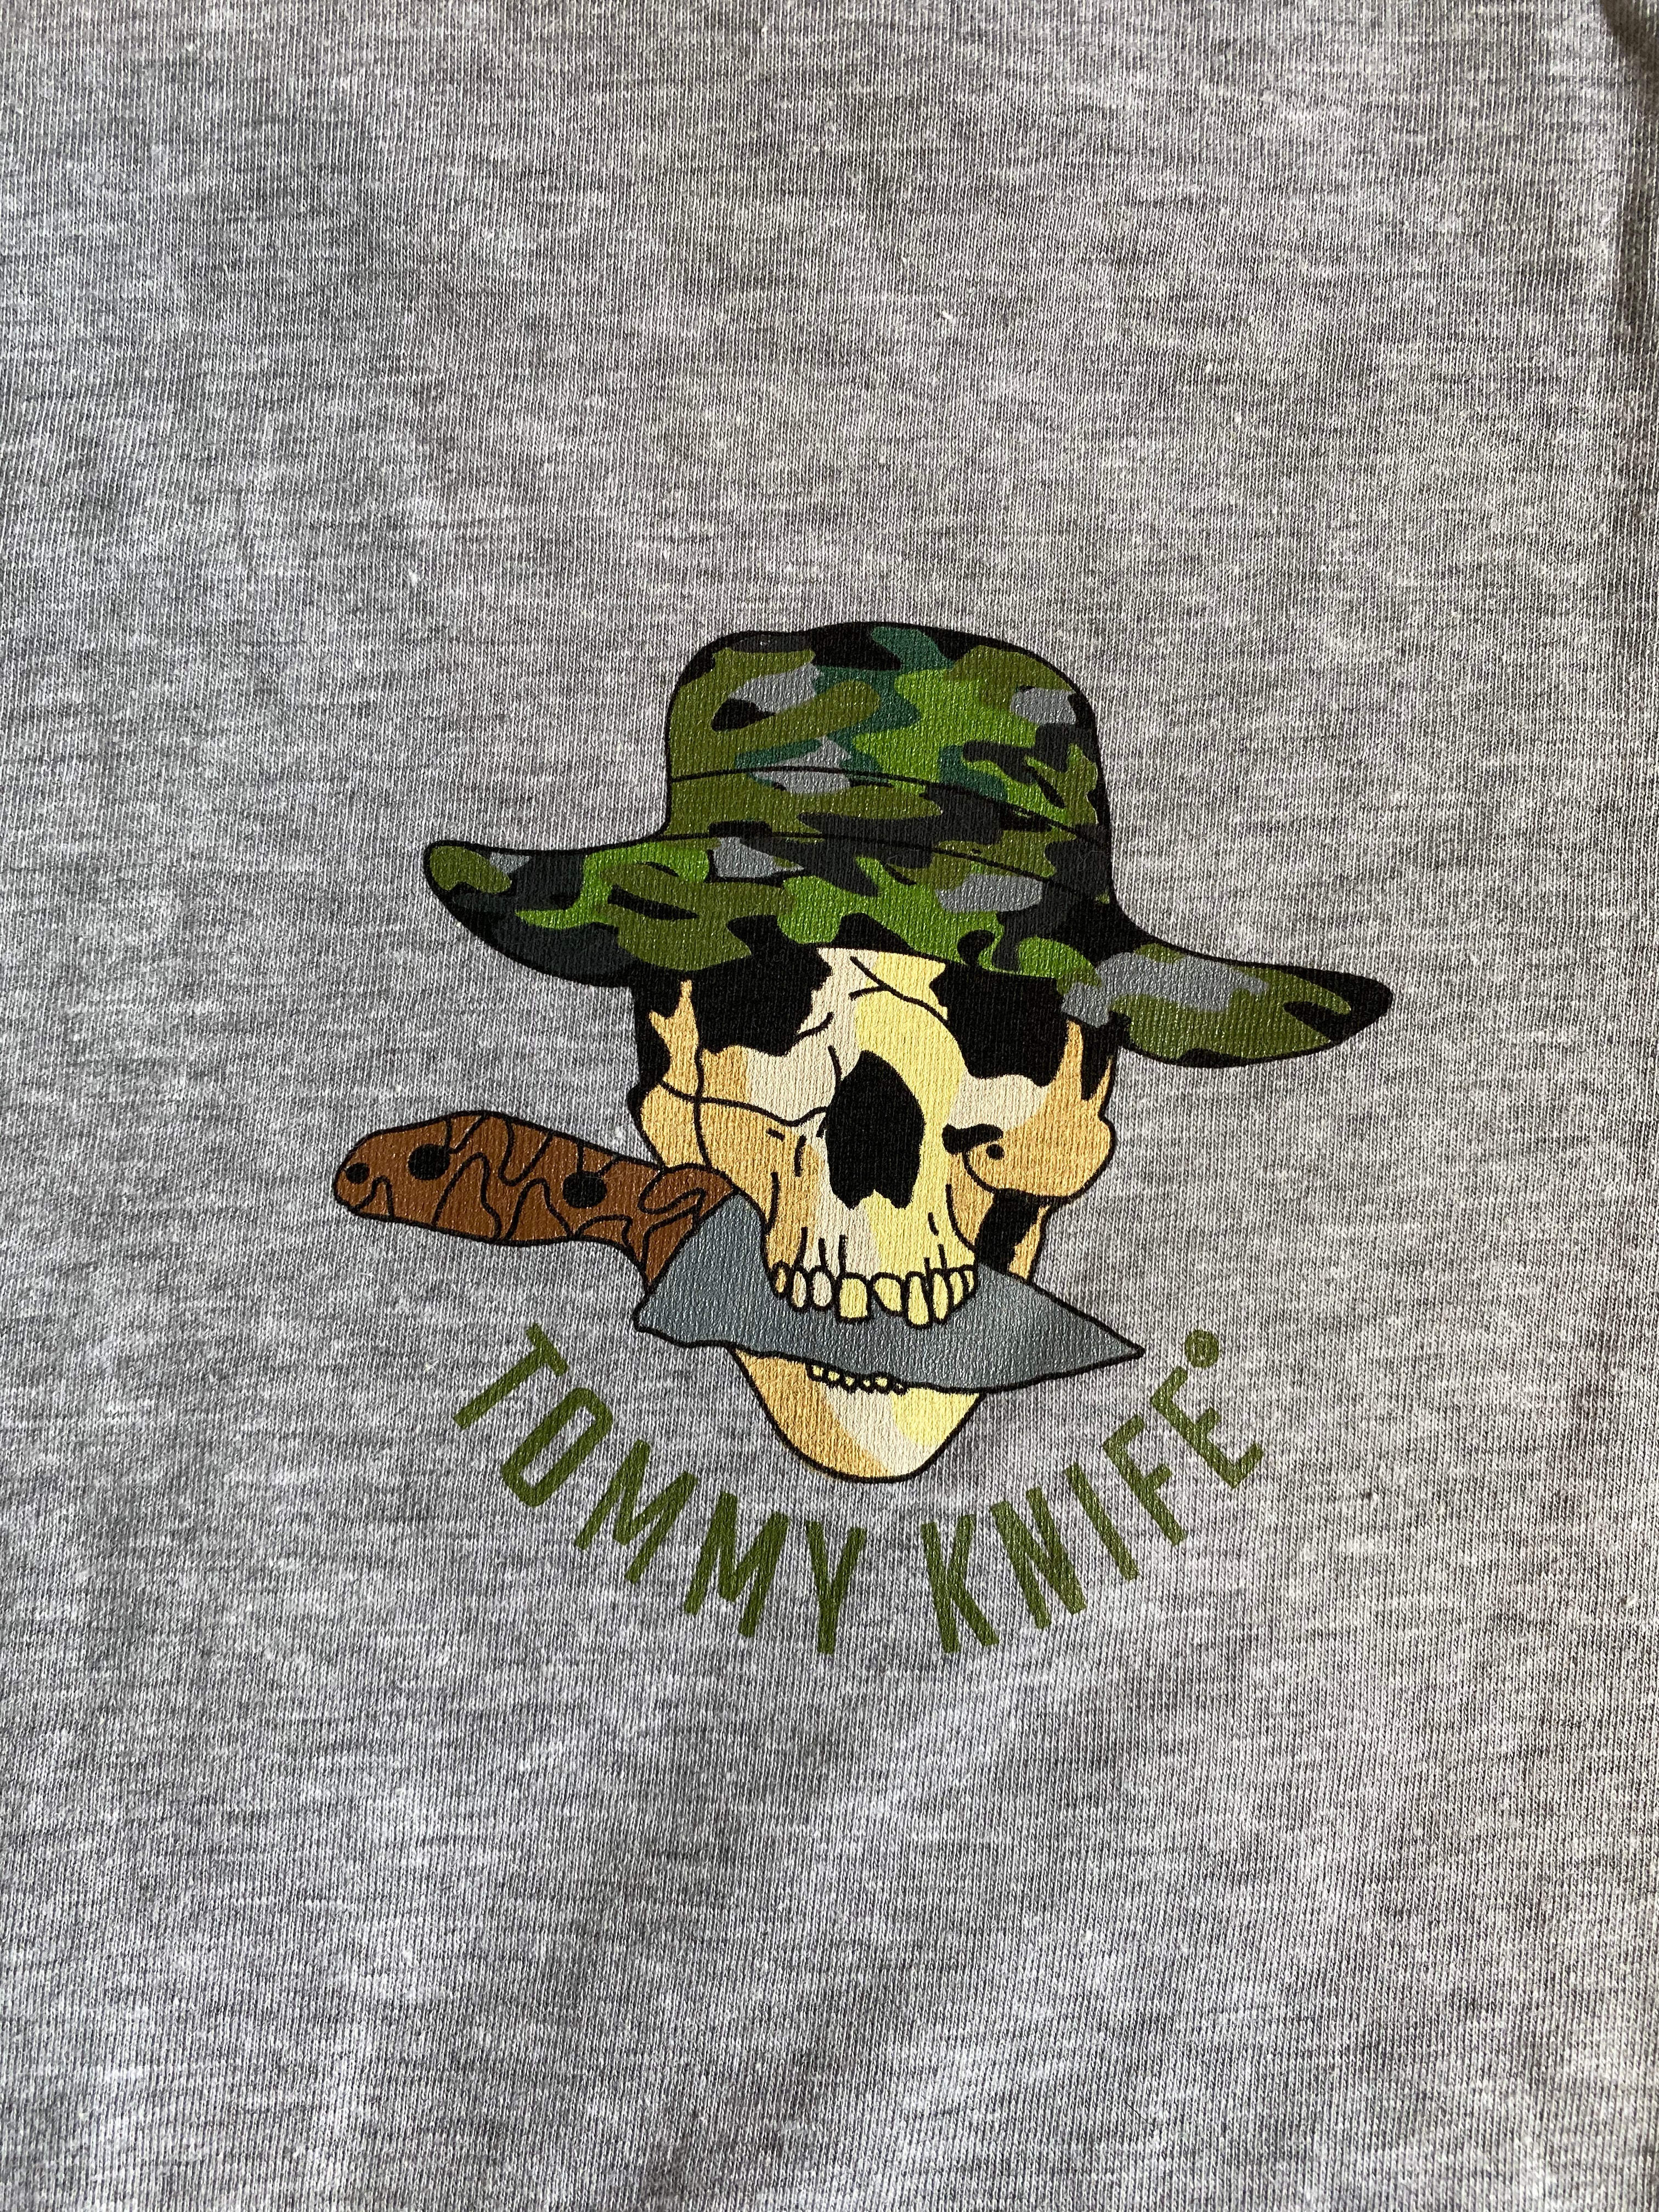 Tommy Knife® Zip Up Hoodie (Black or Heather Gray)